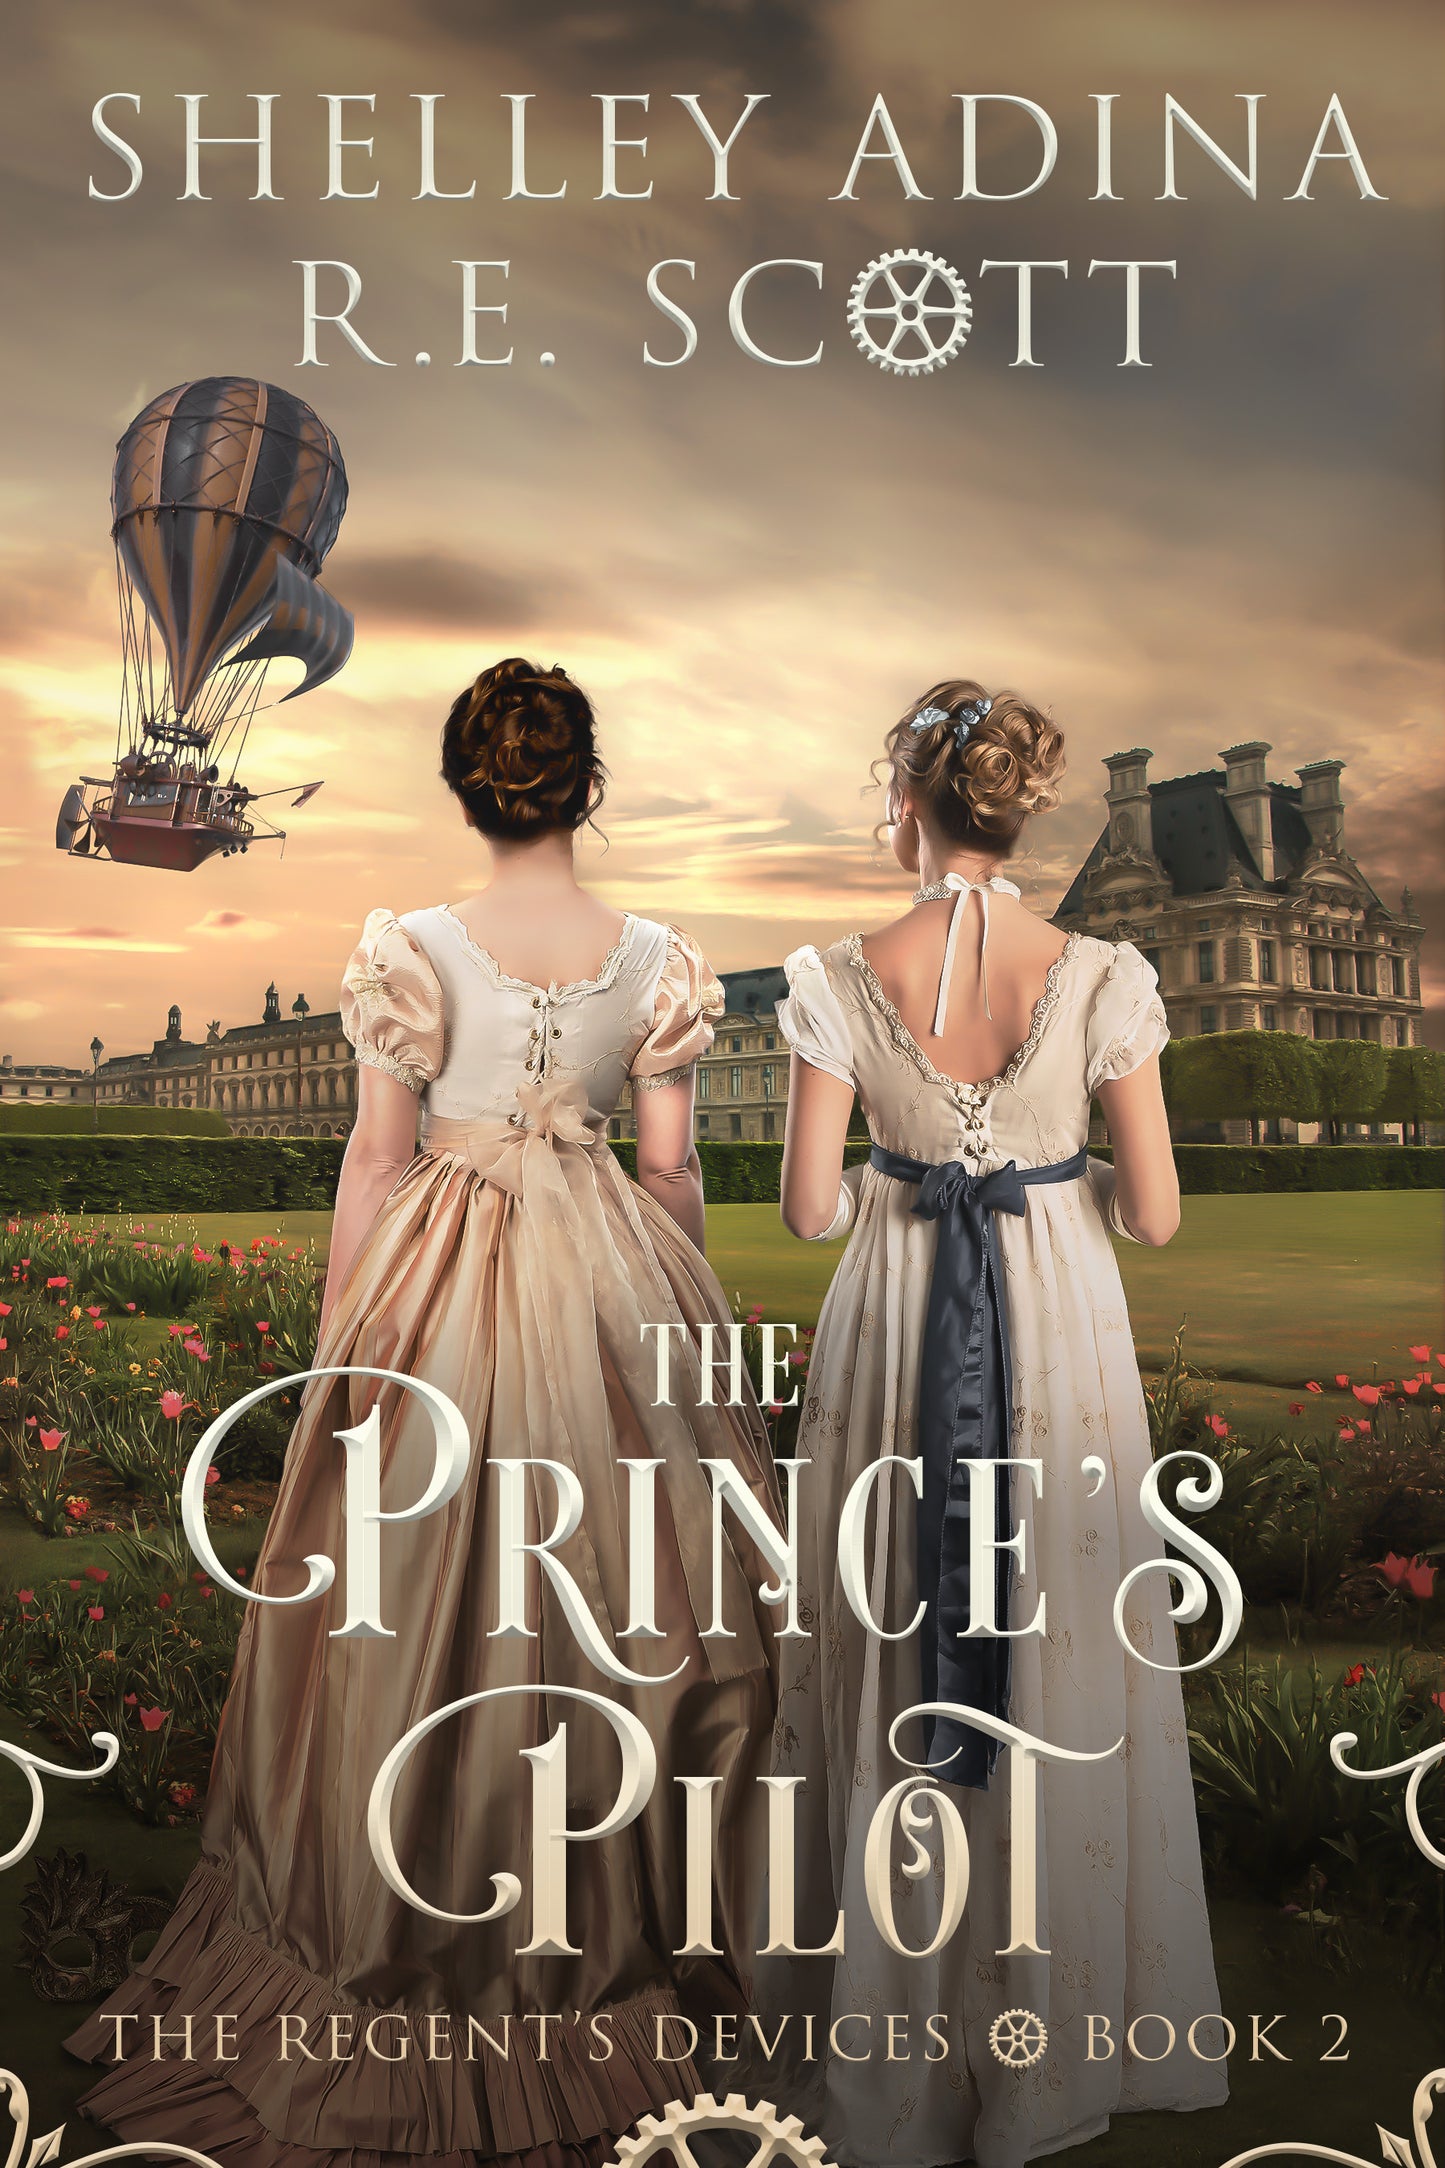 The Prince's Pilot by Shelley Adina and R.E. Scott